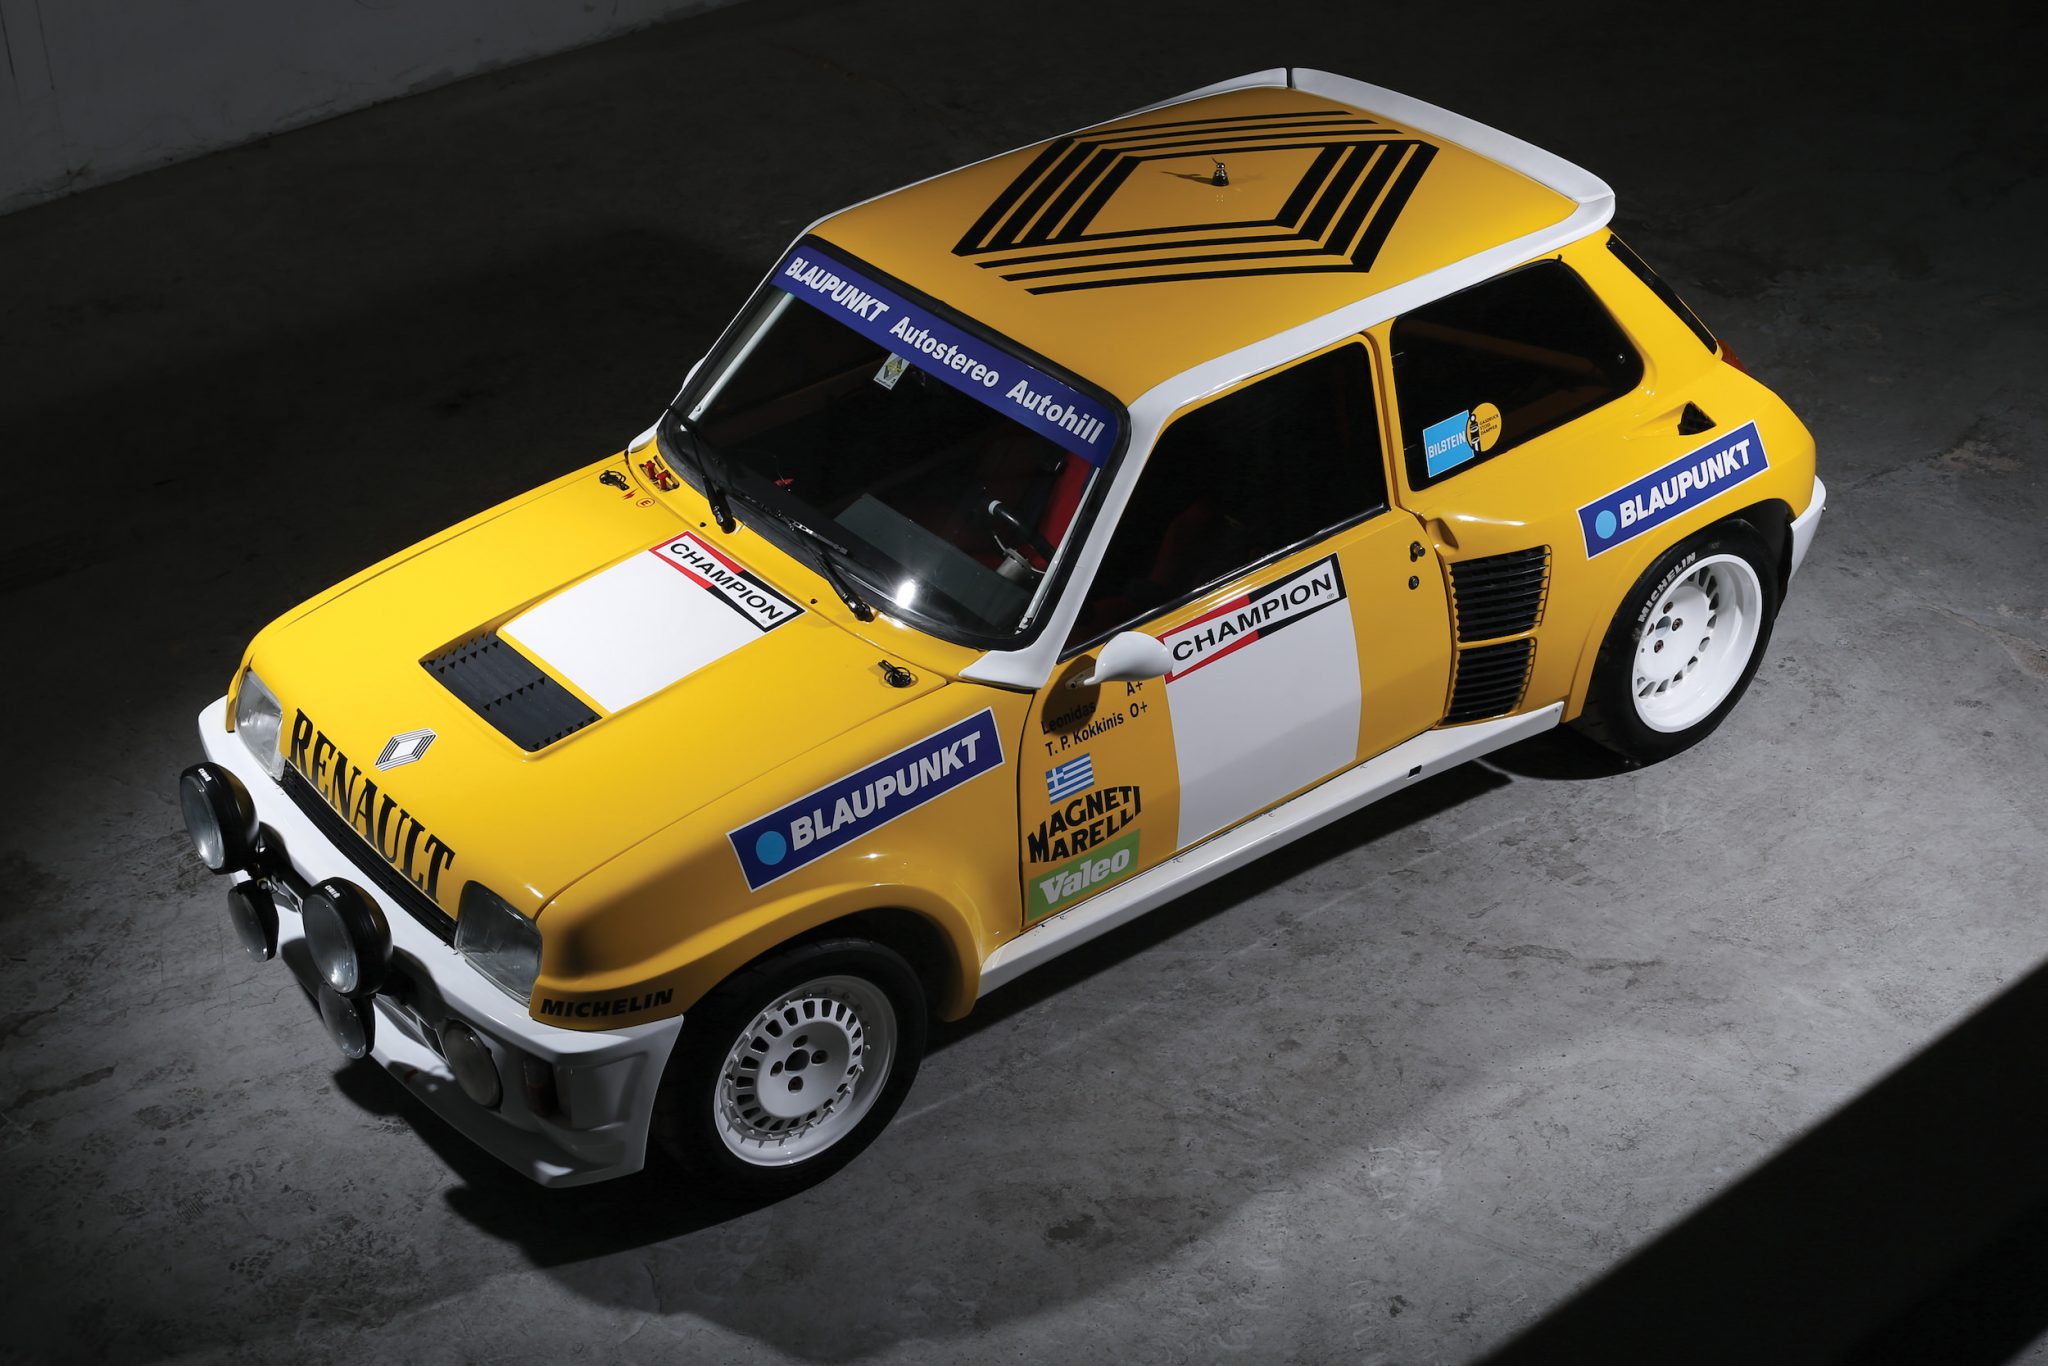 1980 Renault 5 Turbo